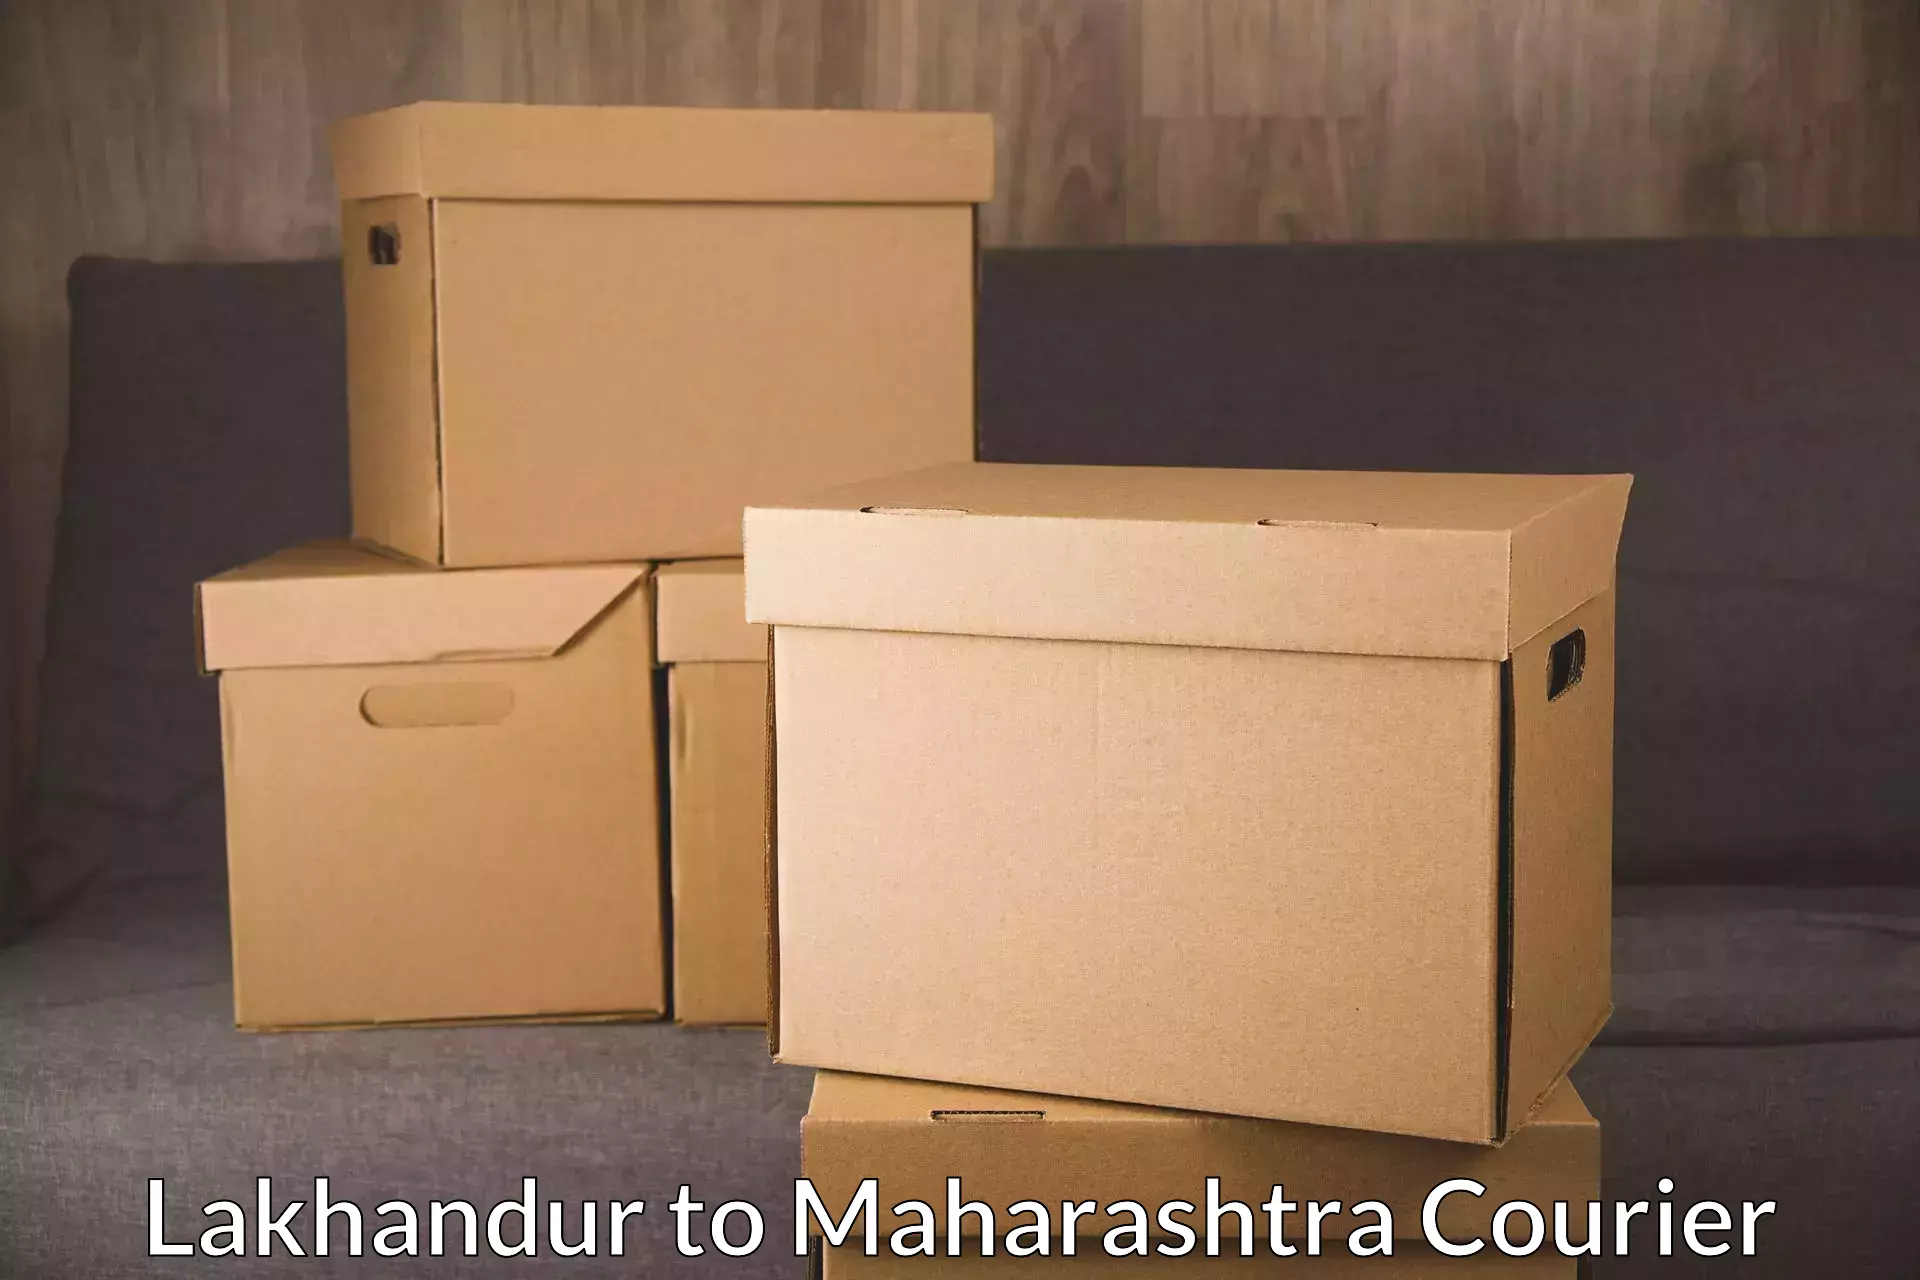 Courier service partnerships Lakhandur to Dadar